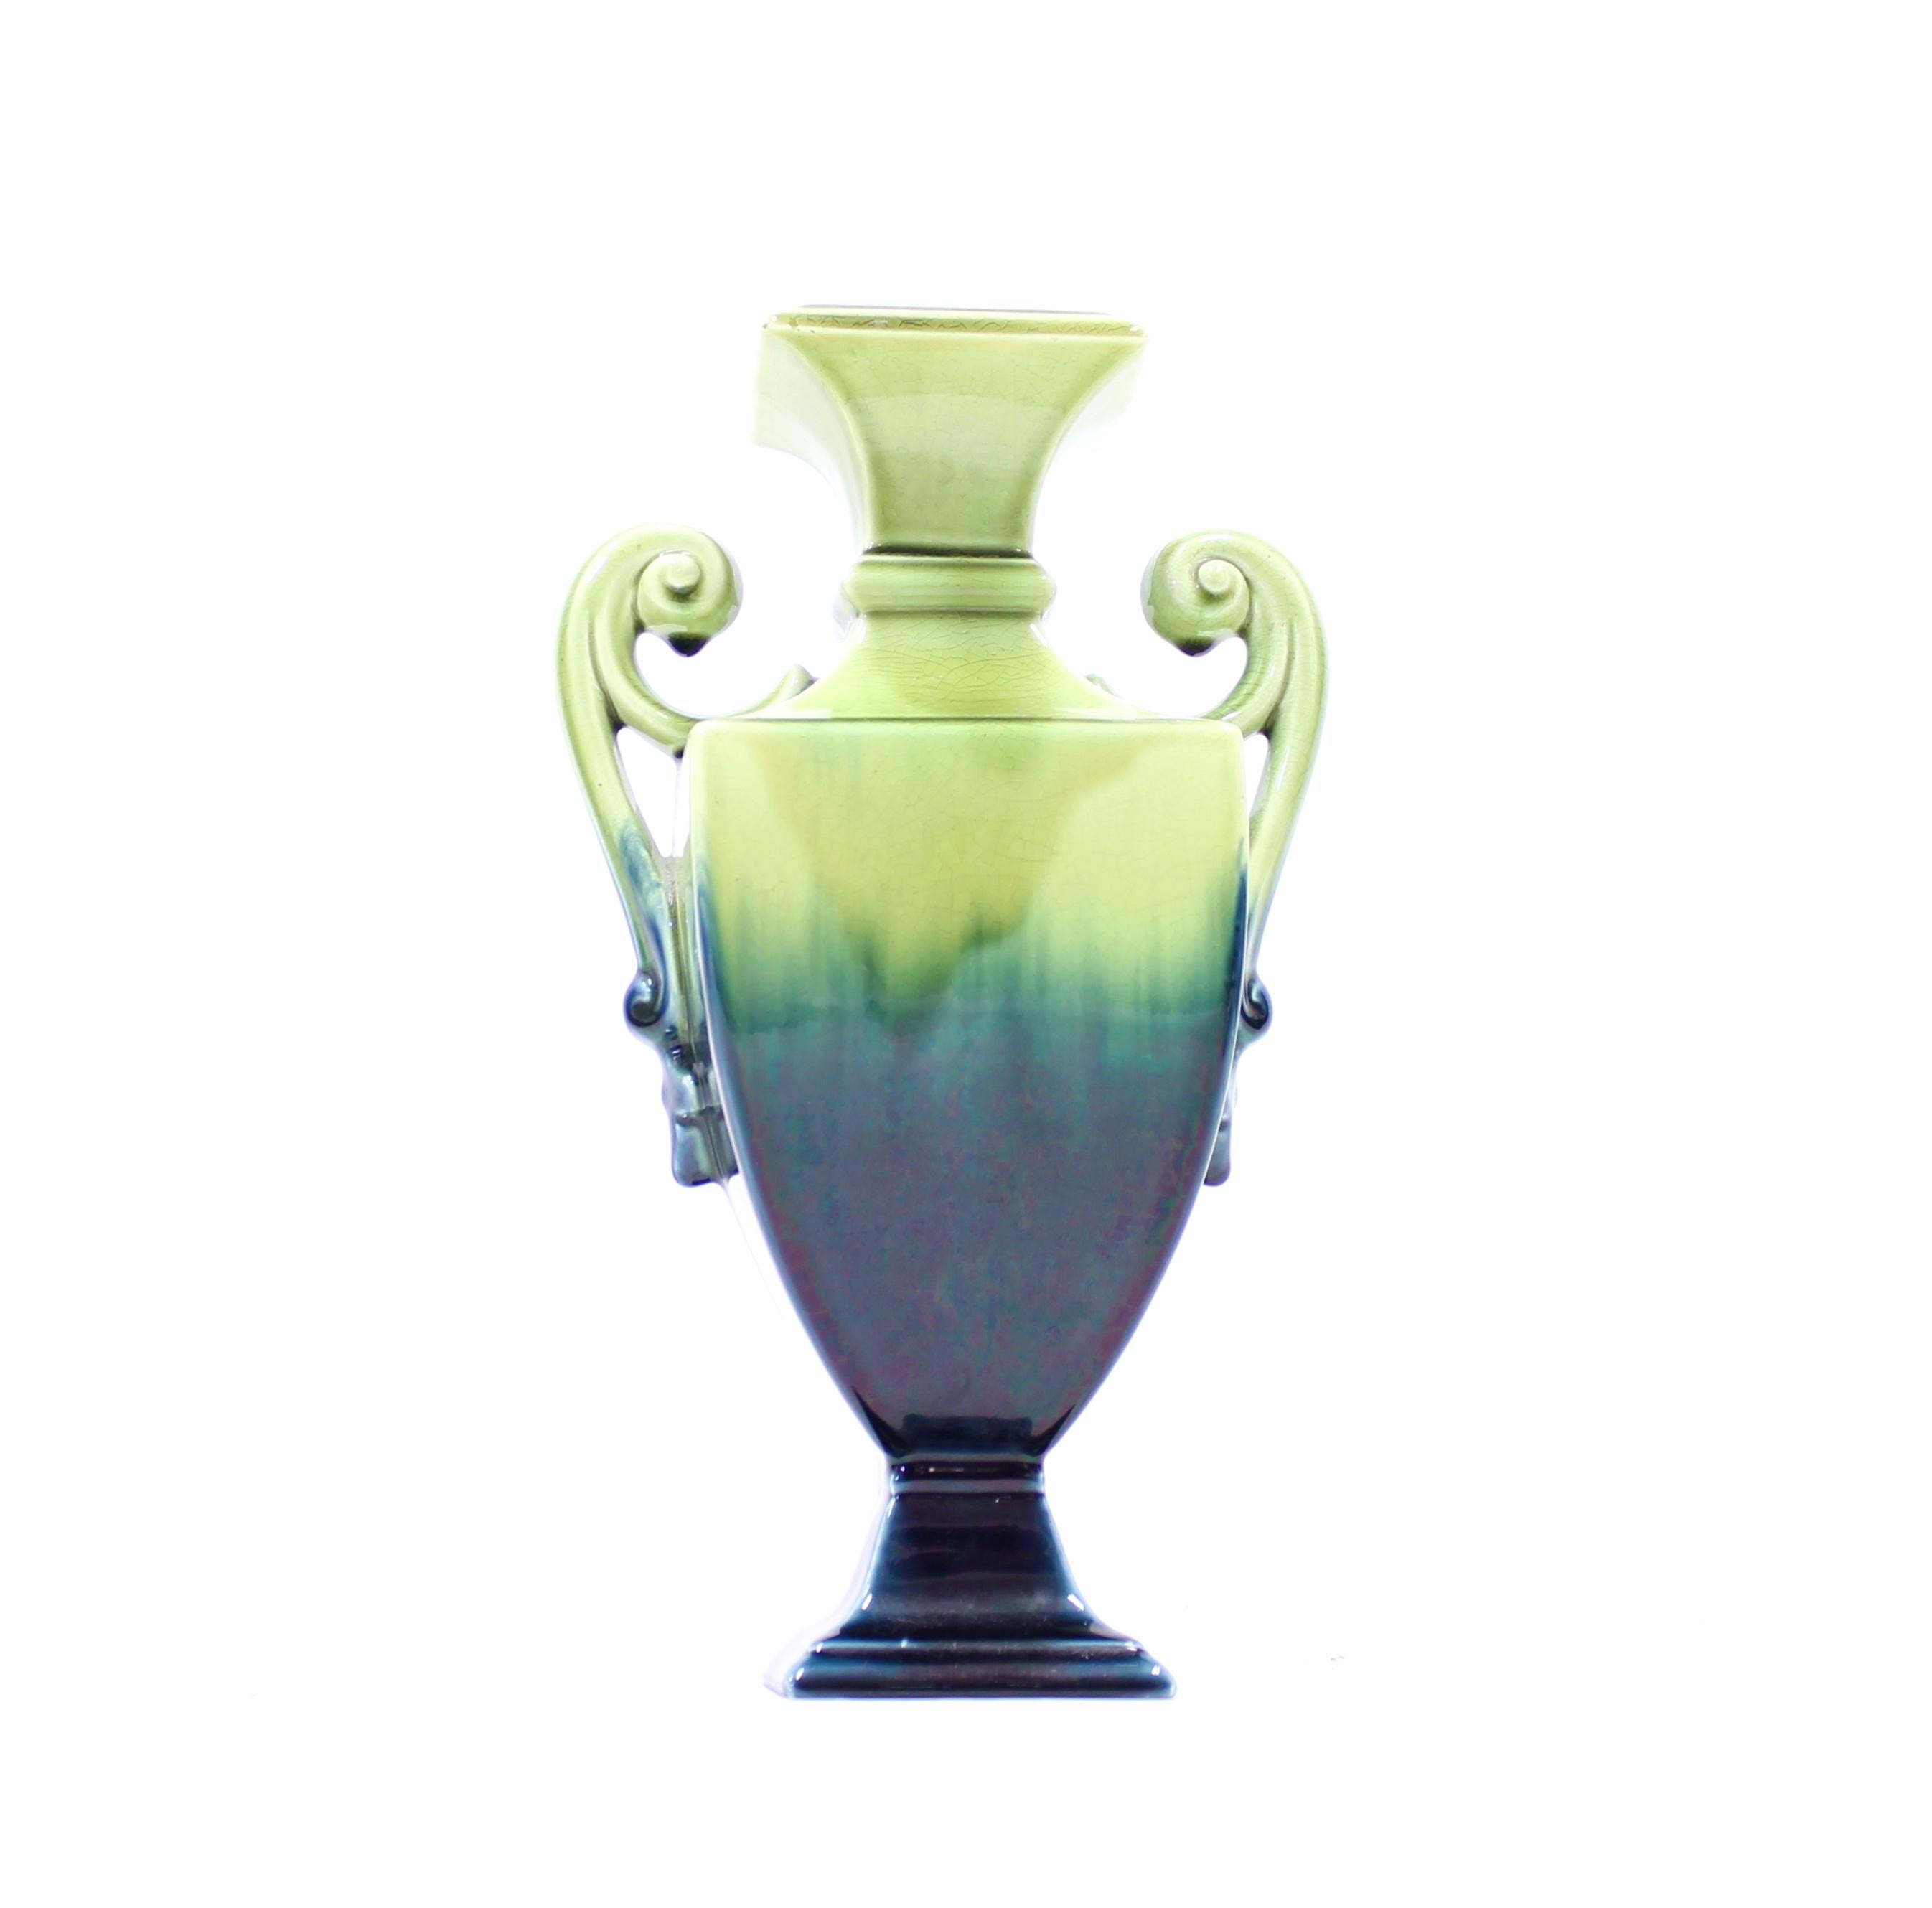 20th Century Swedish Art Nouveau Creamware Vase from Rörstrand, 1910s For Sale